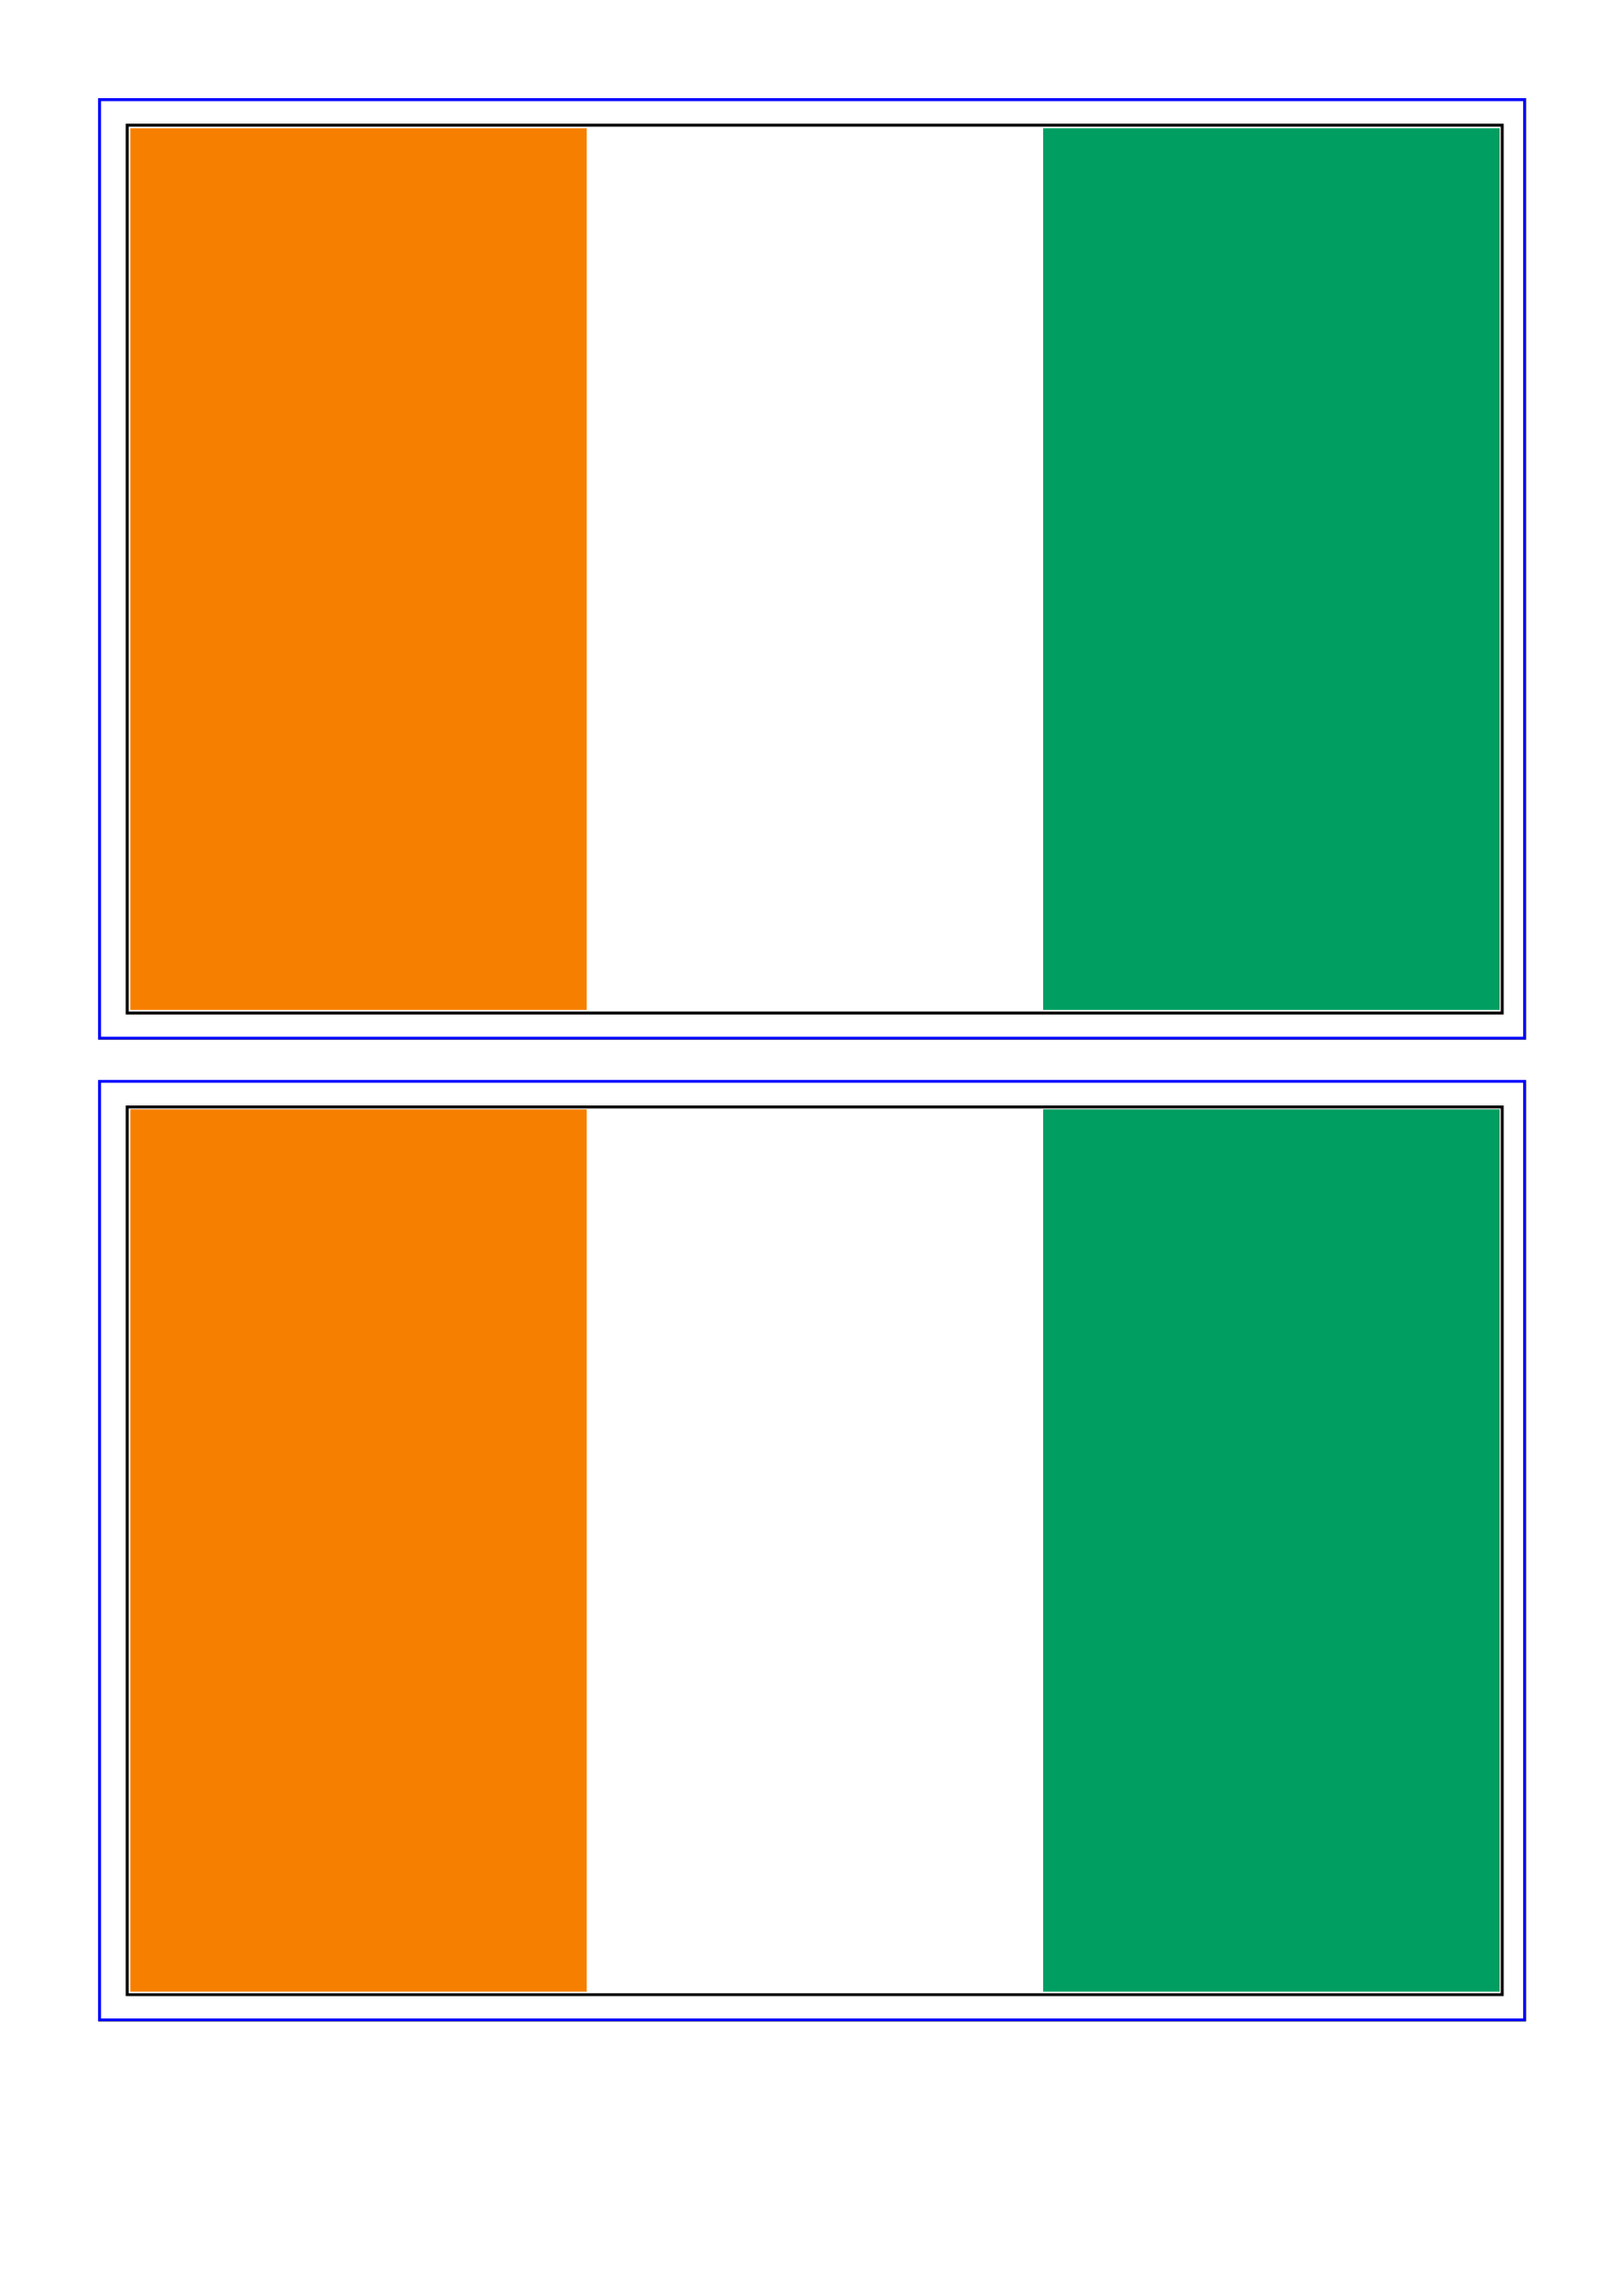 Ivory Coast Flag template gratis en premium templates